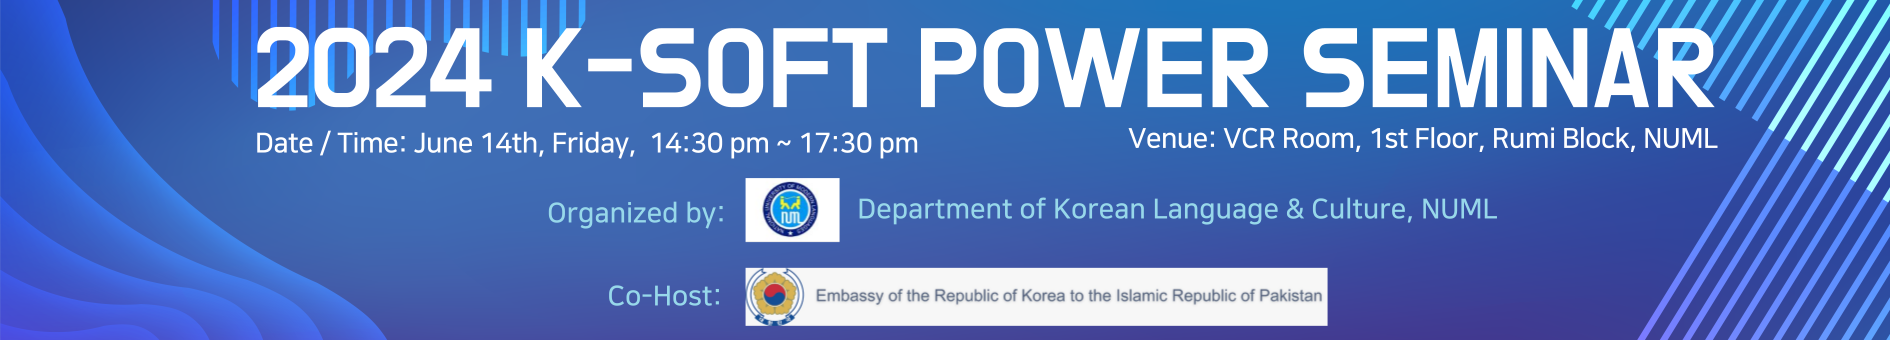 Seminar on Korea Soft Power